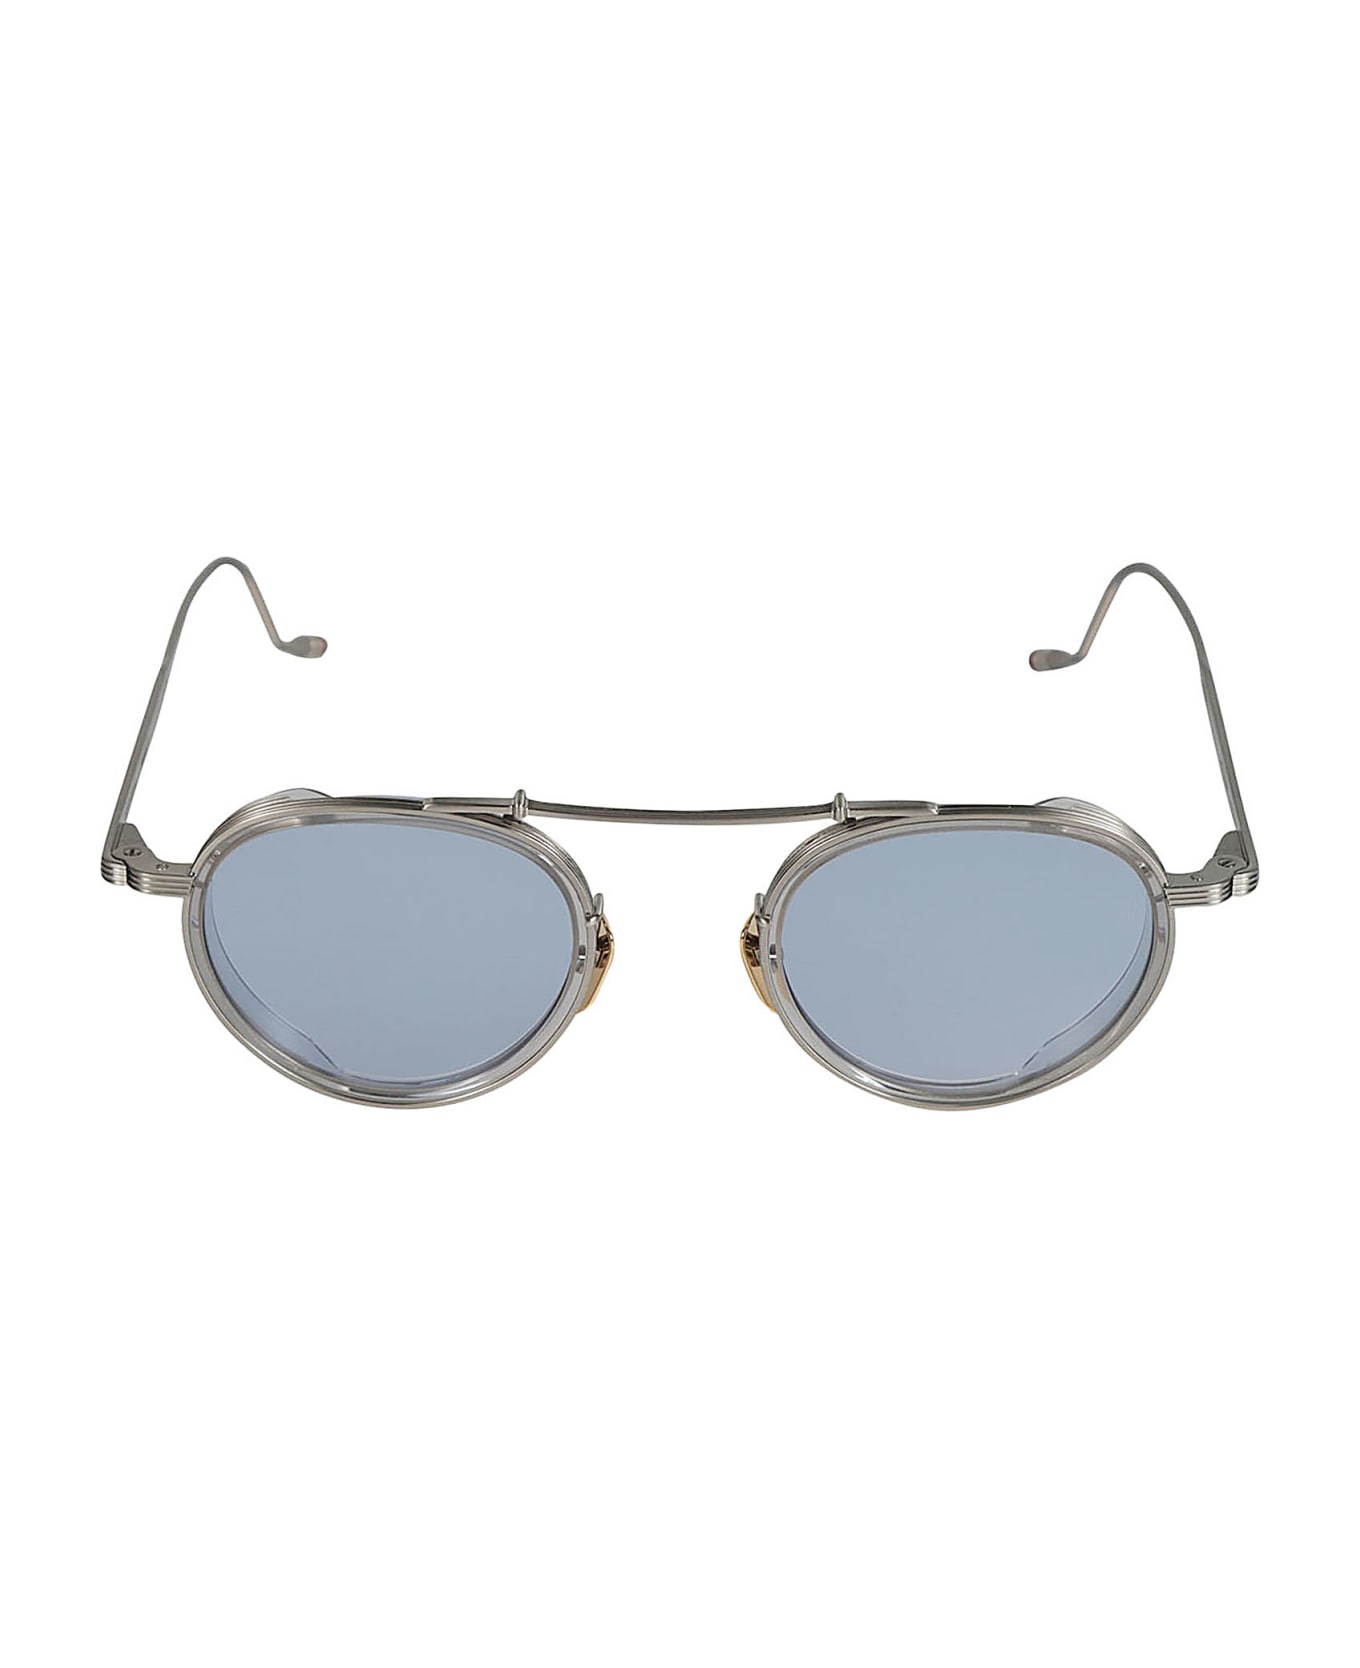 Jacques Marie Mage Top Bridge Sunglasses - fog